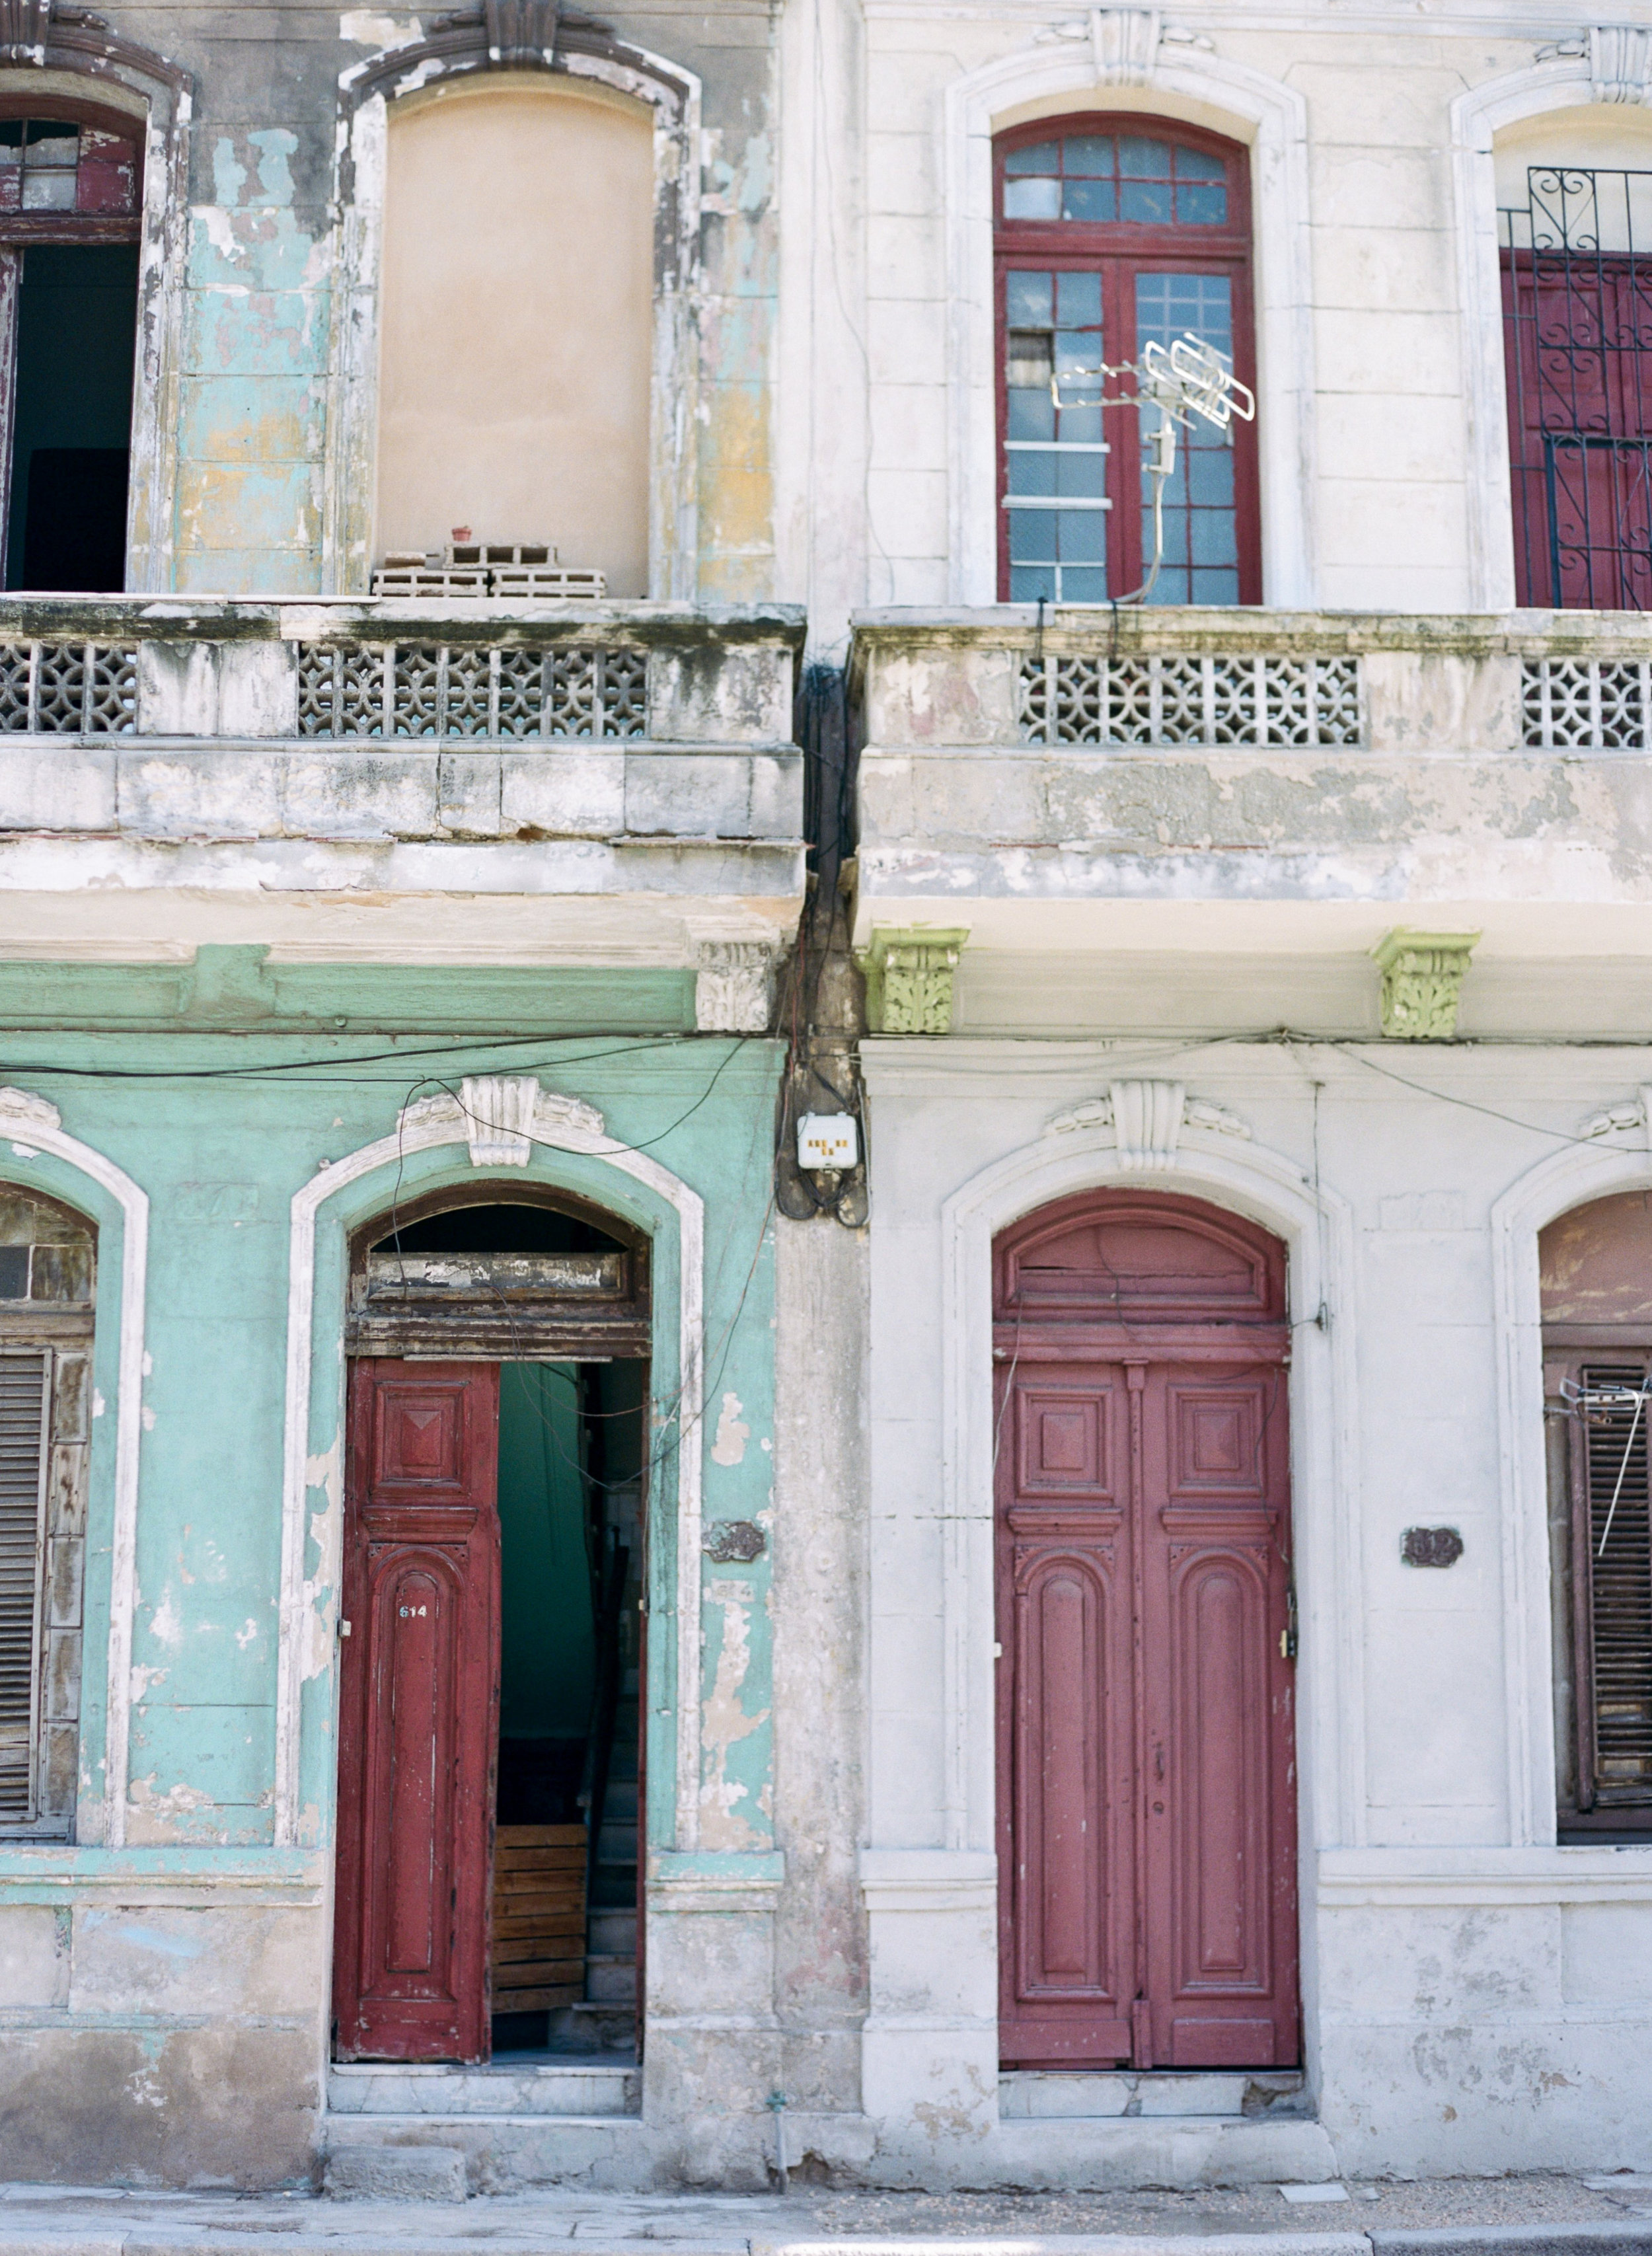 Cuba-Travel-photography-rachael-mcitnosh-photography-30.jpg